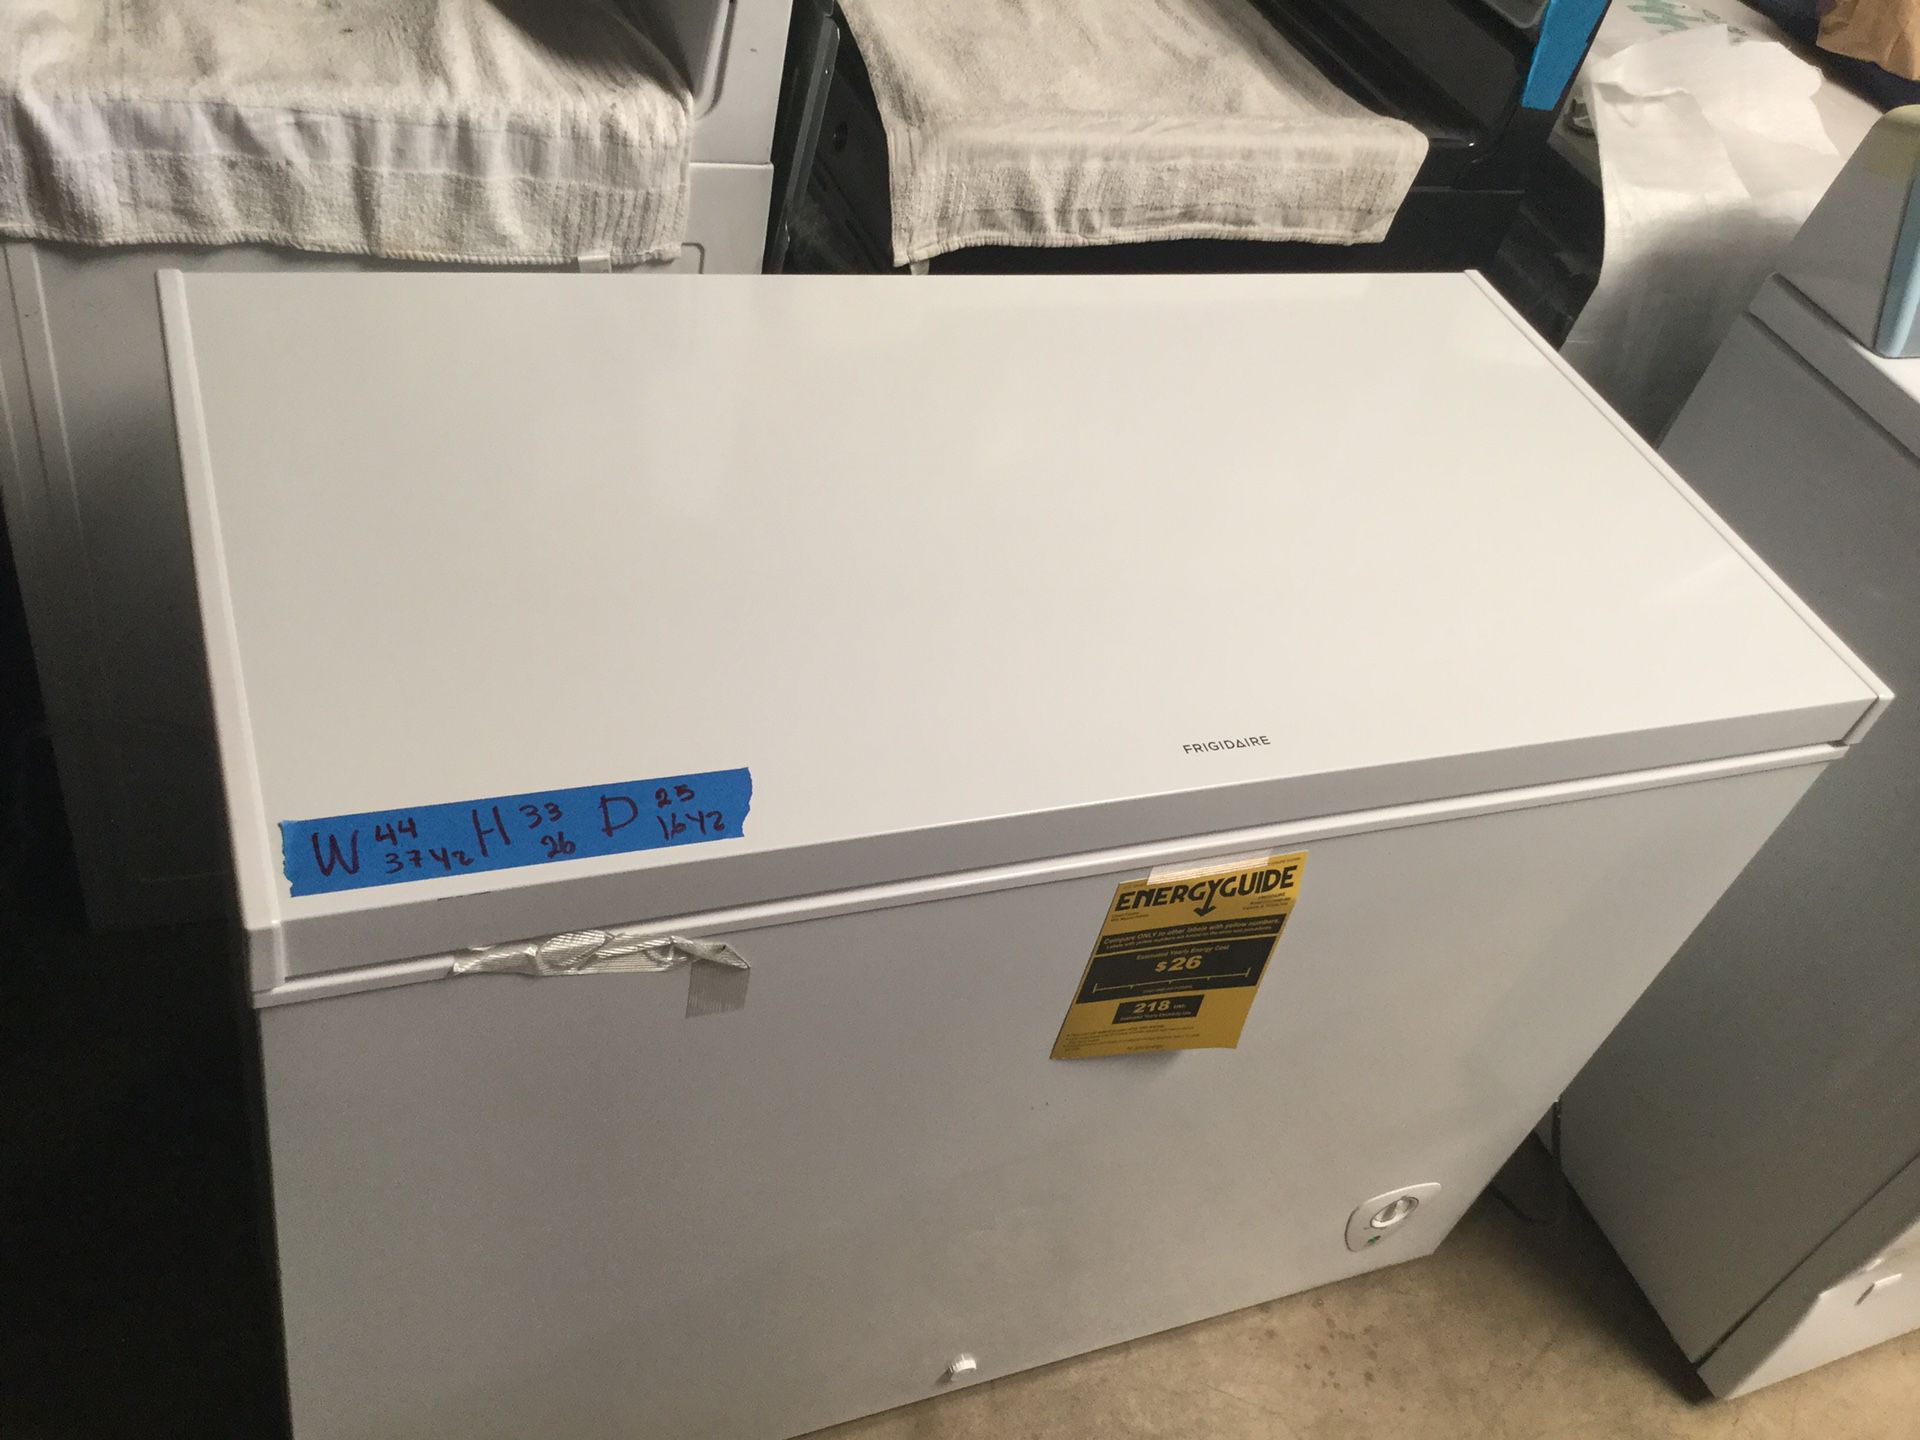 New chest freezer frigidaire 8.7 cu ft white energy save w 44”